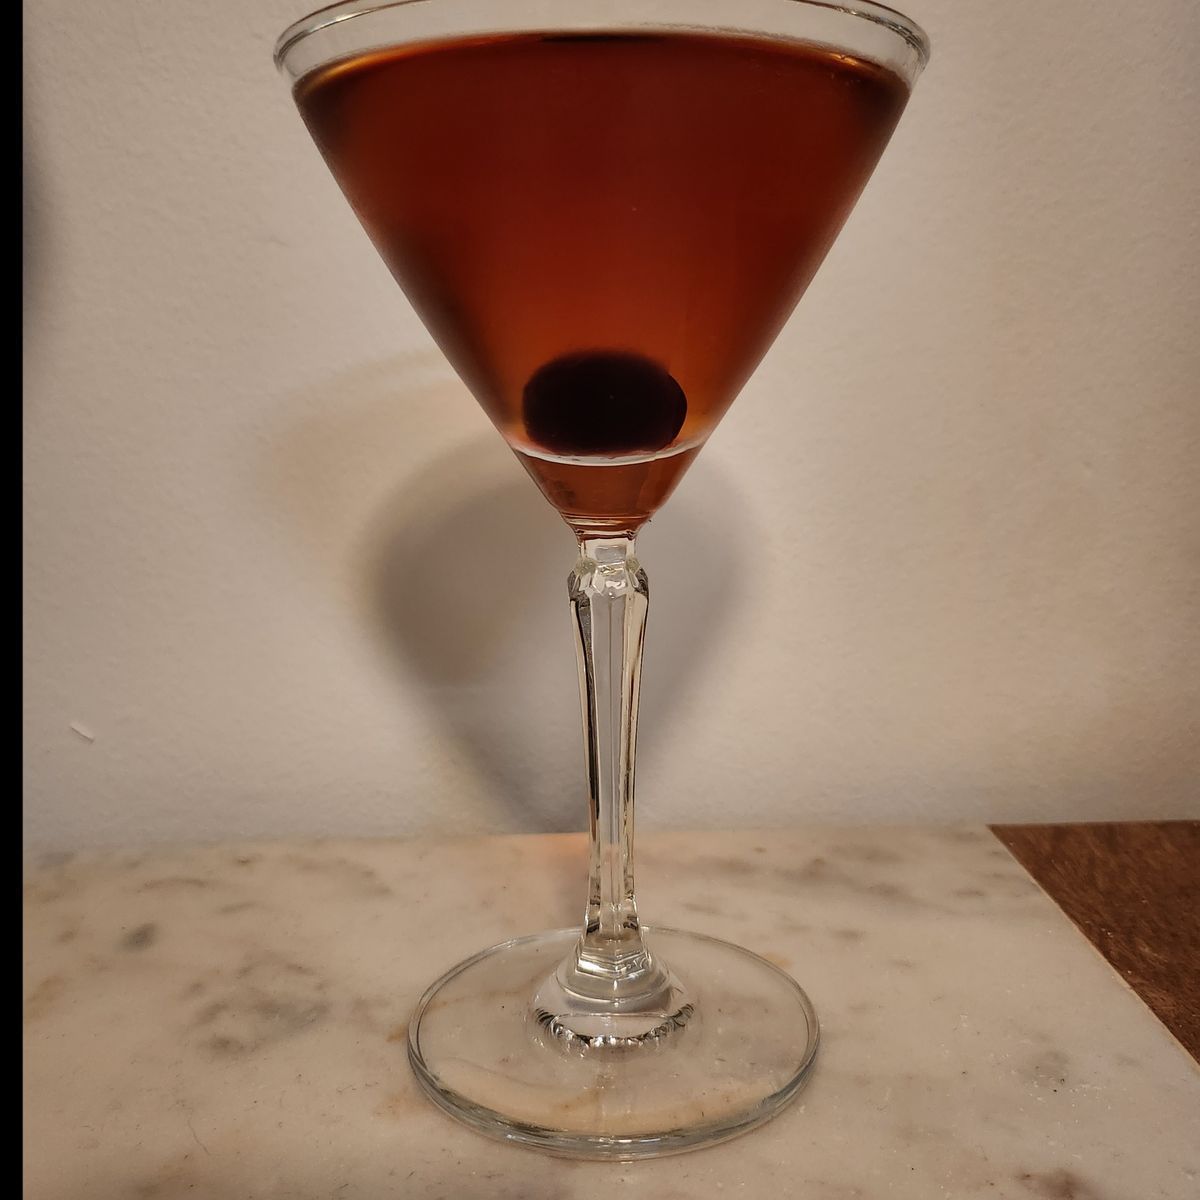 Classic Scotch Manhattan, invented in 1894 at New York's Waldorf-Astoria Hotel